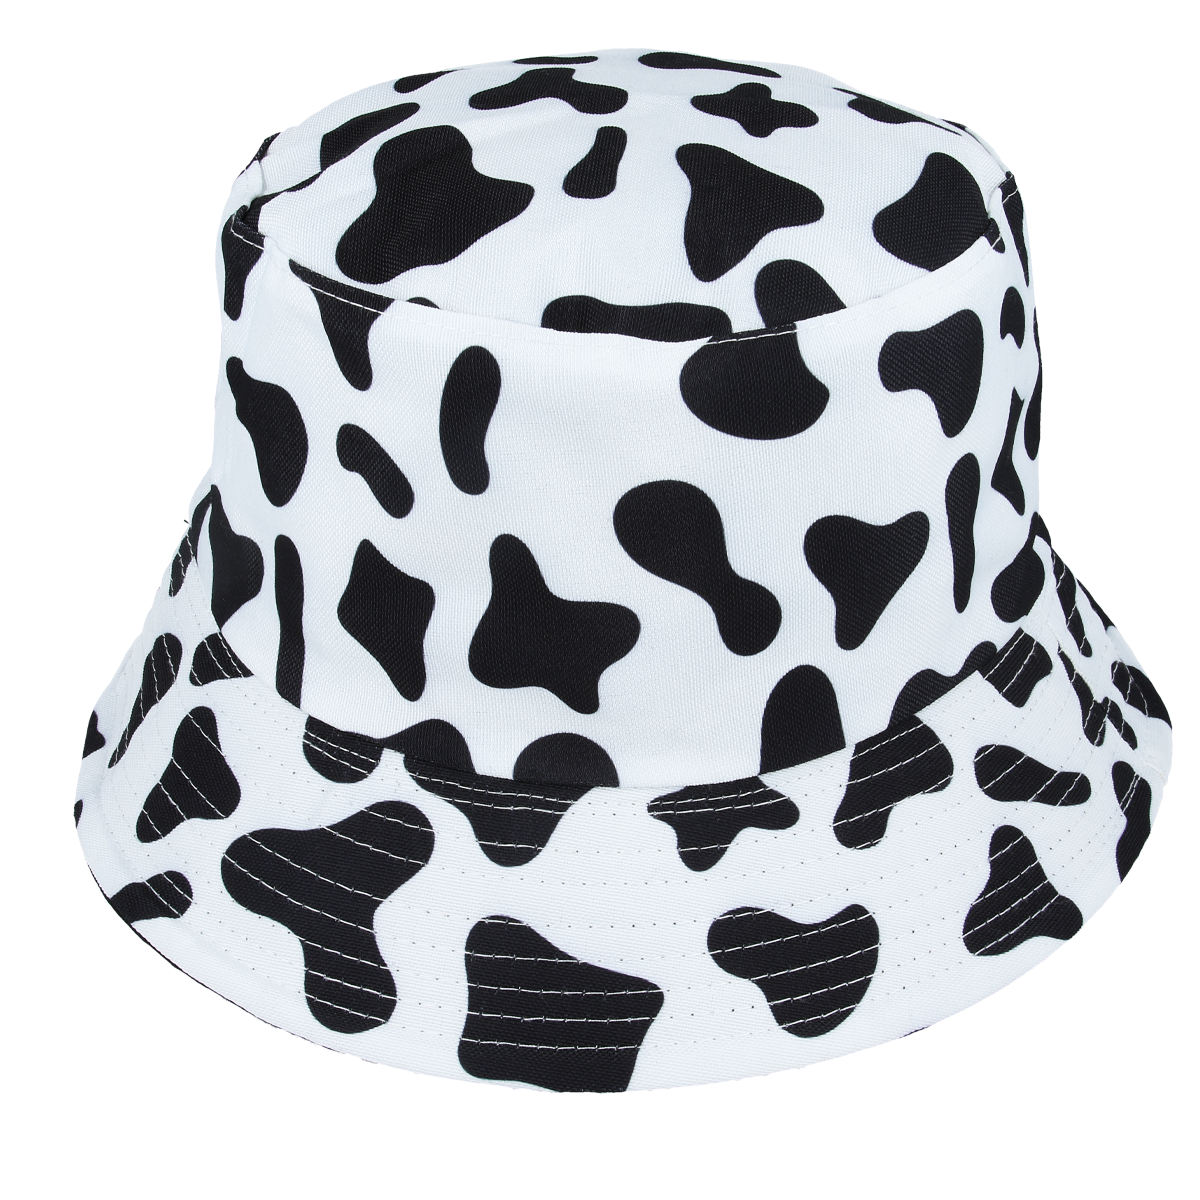 Maz Reversible Cow Print Pattern Fisherman Bucket Hat